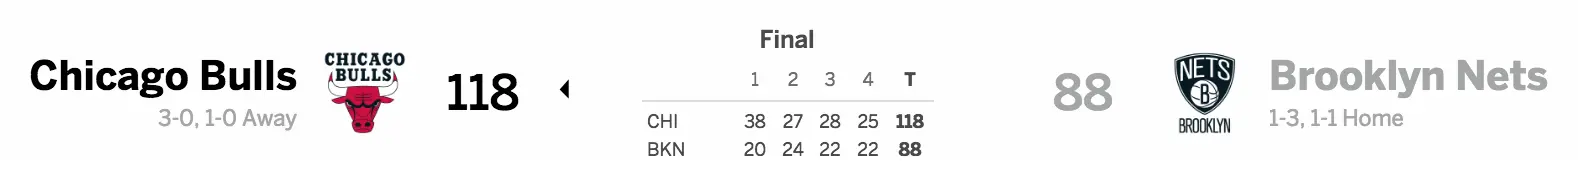 Brooklyn Nets vs. Chicago Bulls 10/31/16 Score